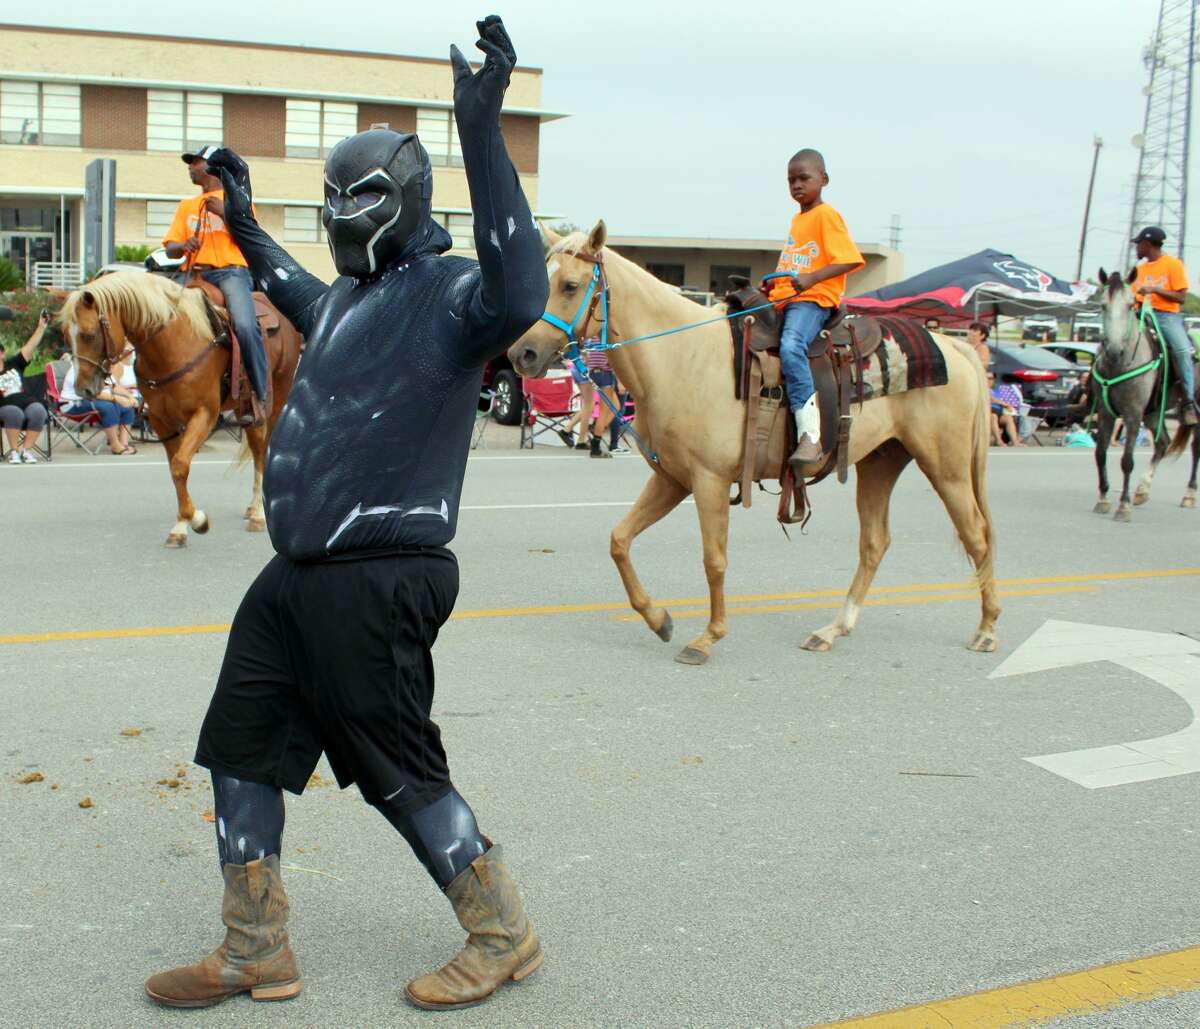 Parade kicks off Fort Bend County Rodeo season